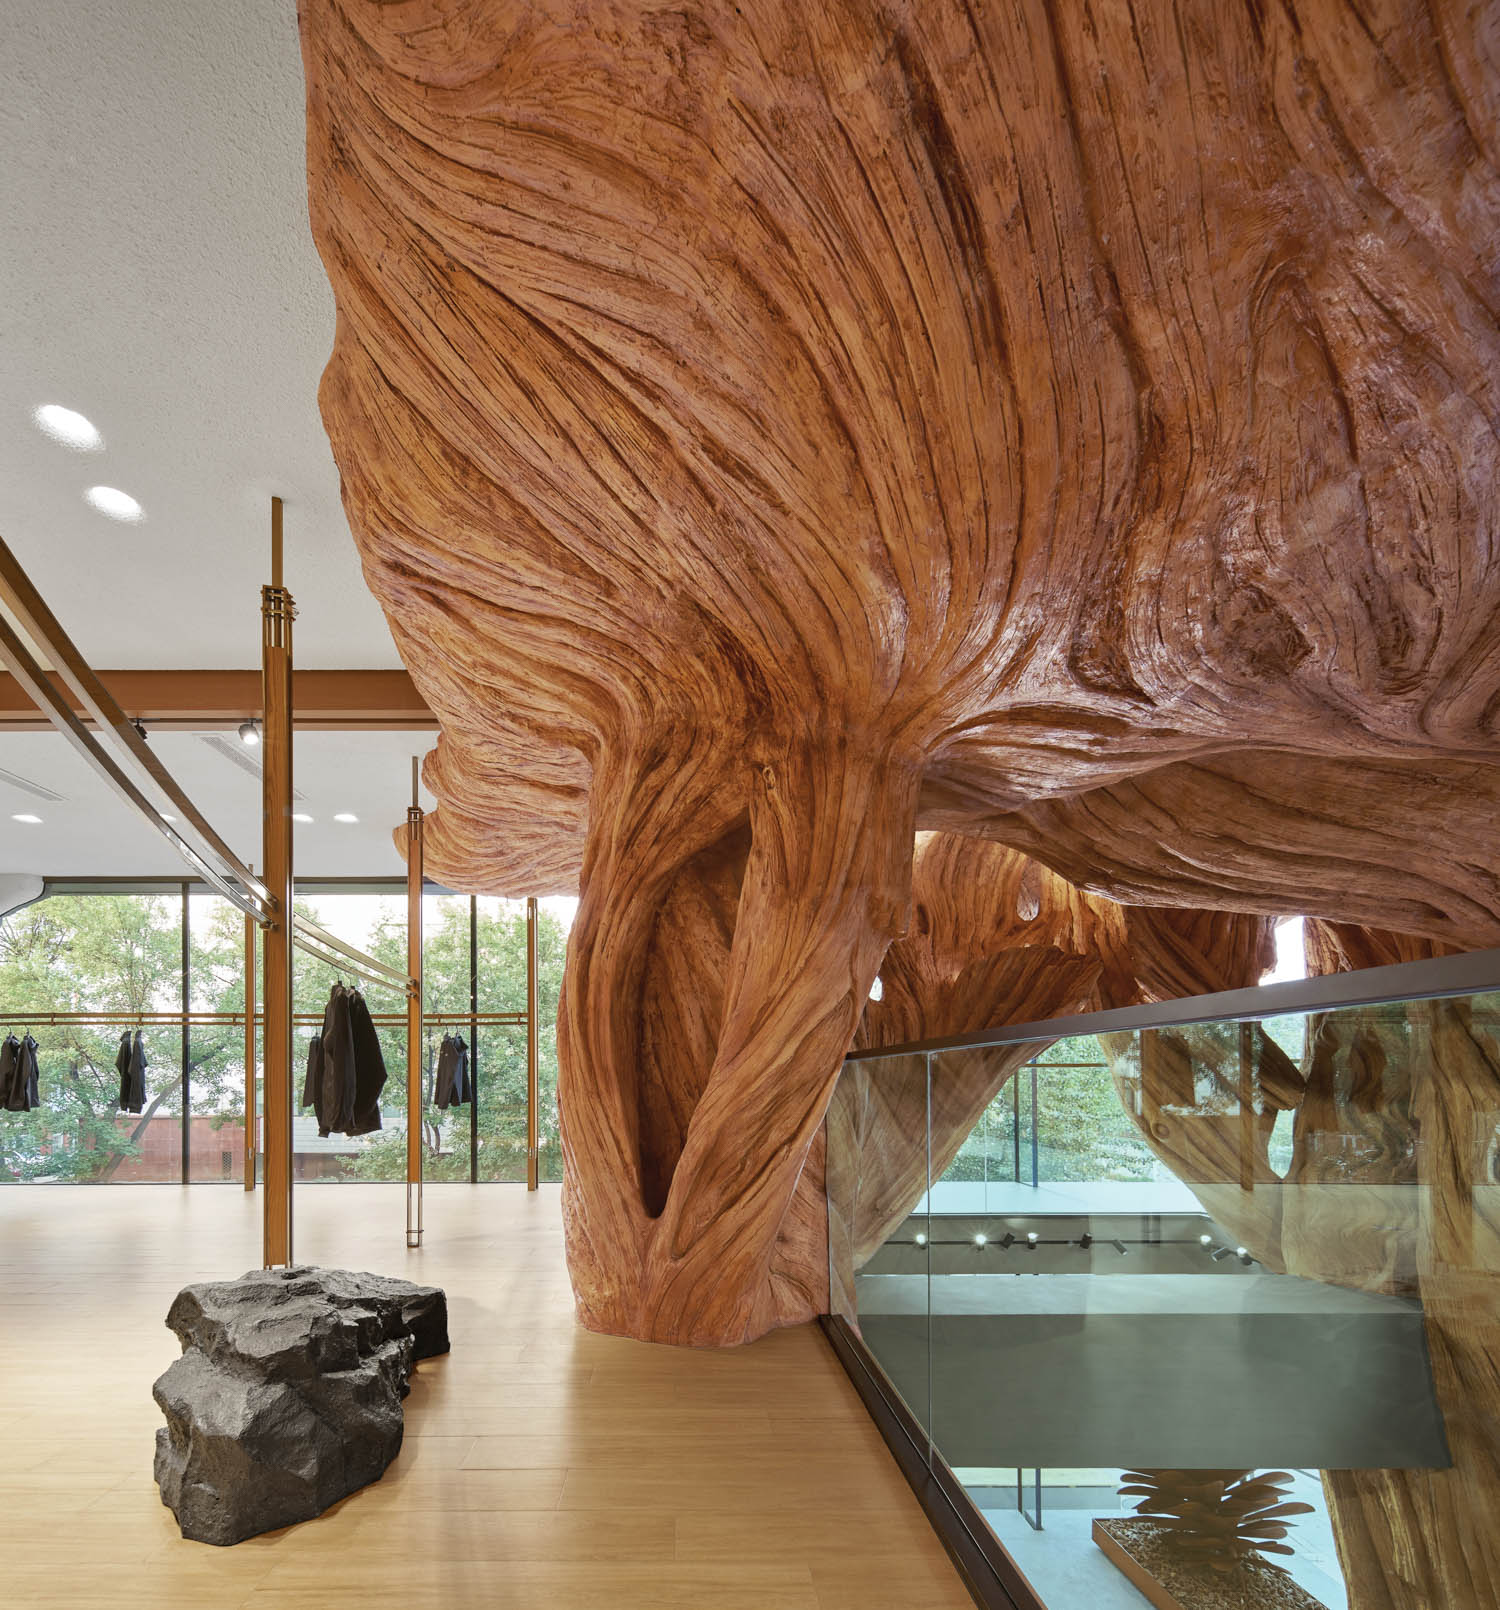 a massive sculpture that looks like a tree